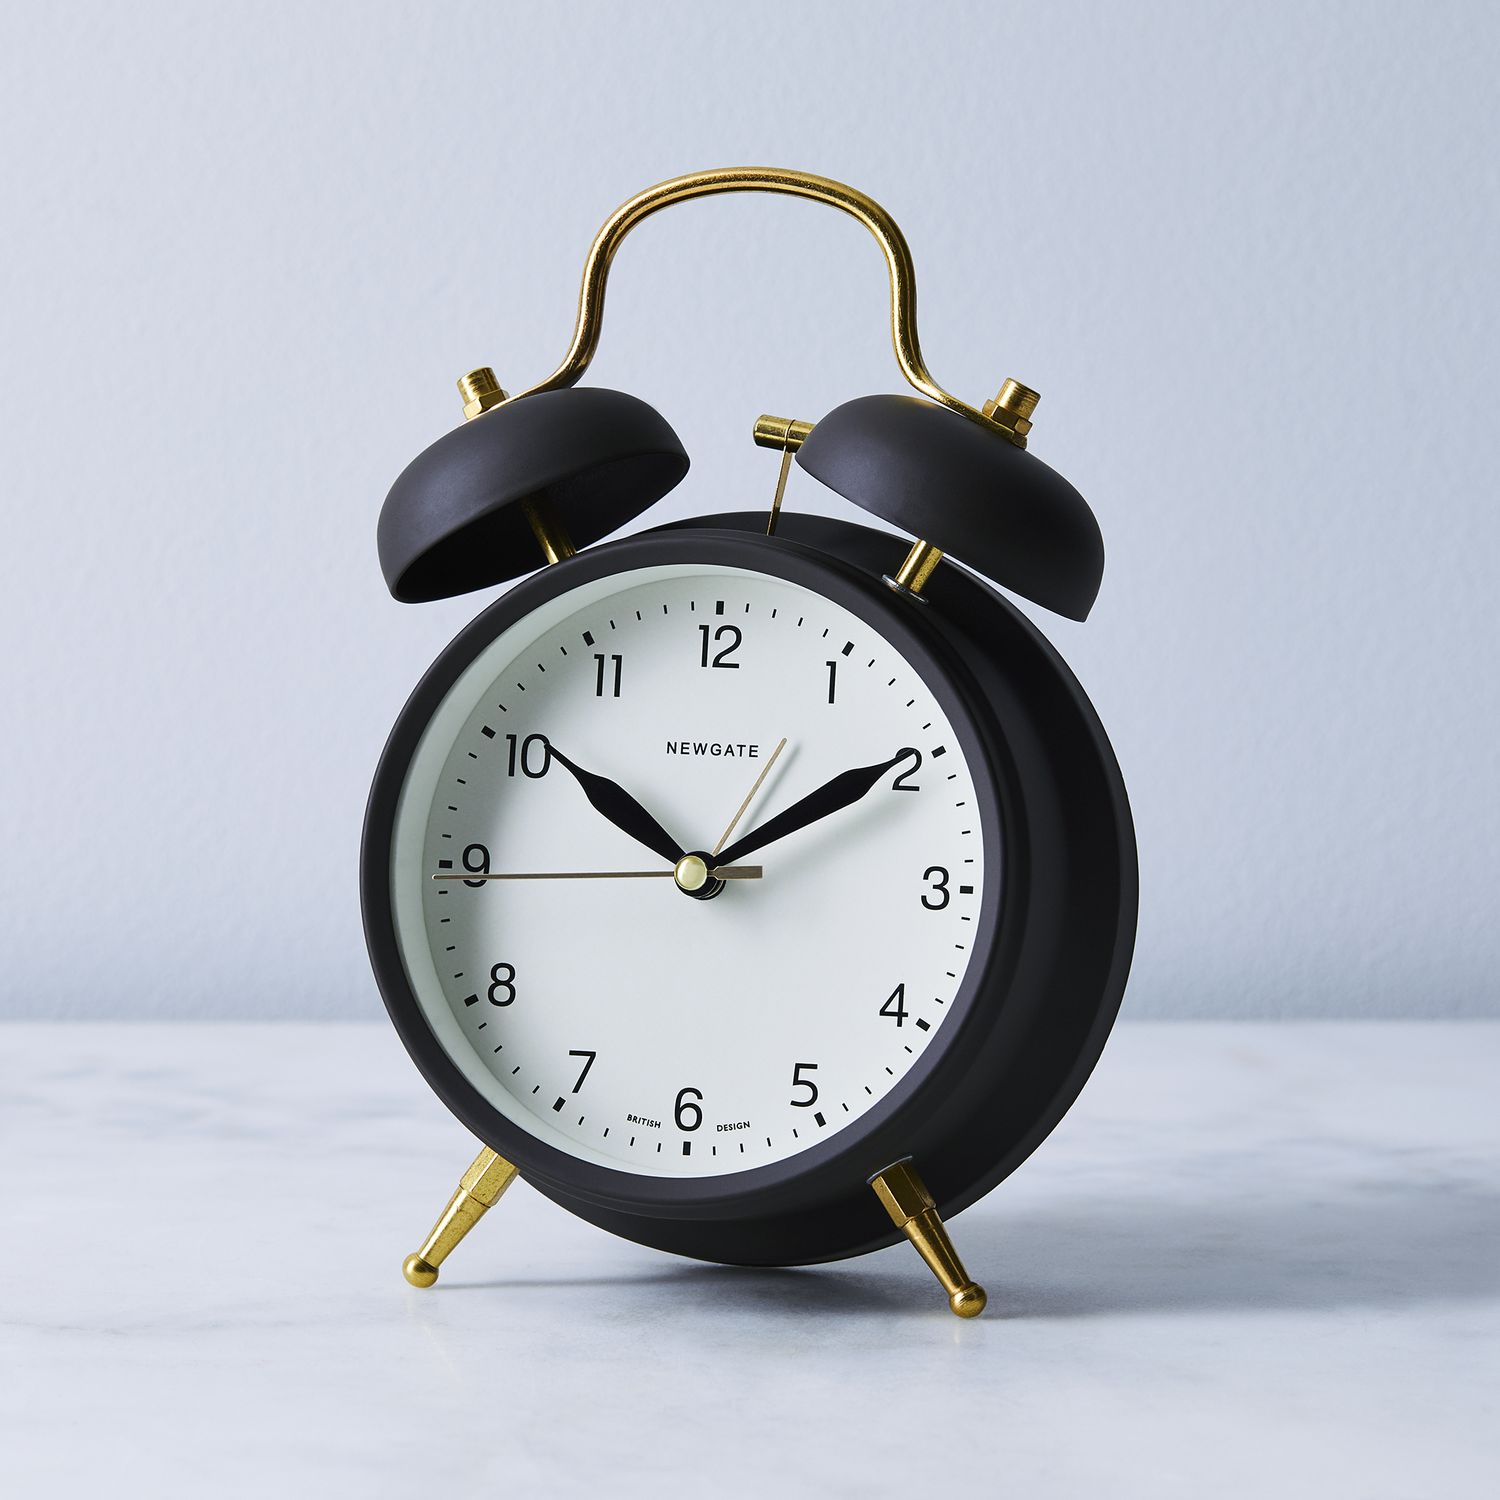 Brass Knocker Alarm Clock on Food52